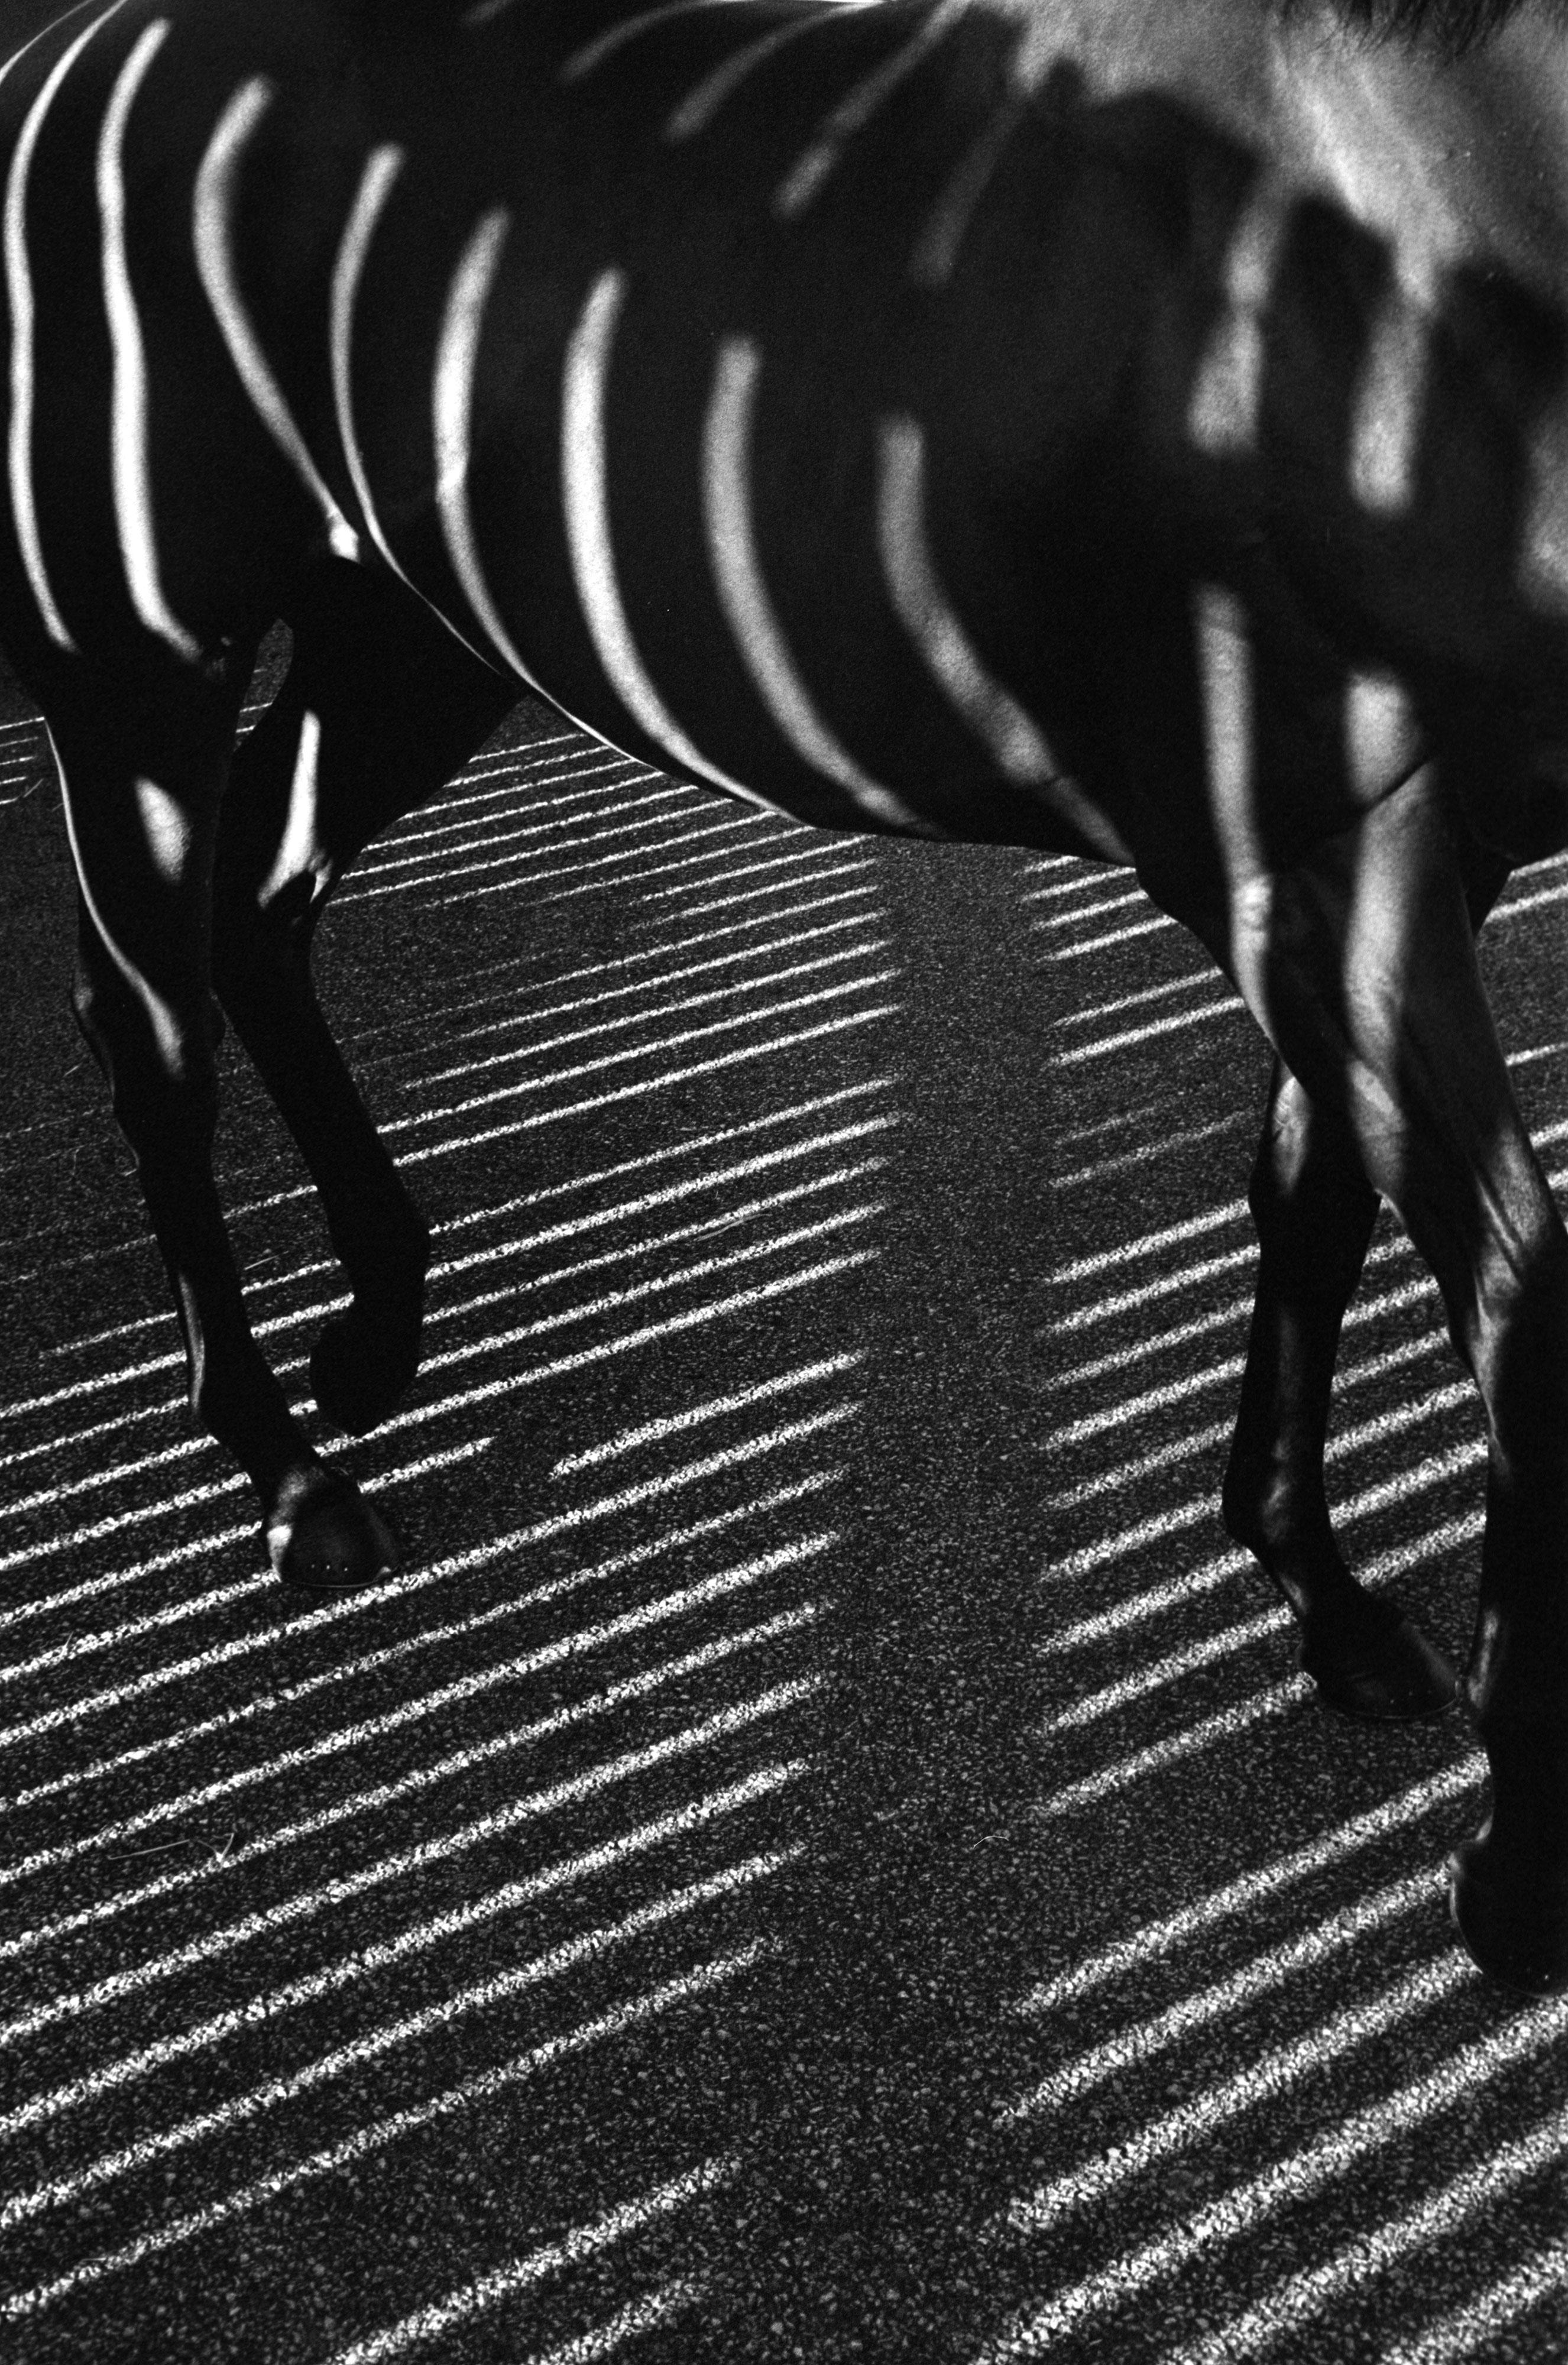 John Reardon Abstract Photograph - Dubawi, ‘Striped/ shadows', Abstract Black and white horse portrait photograph